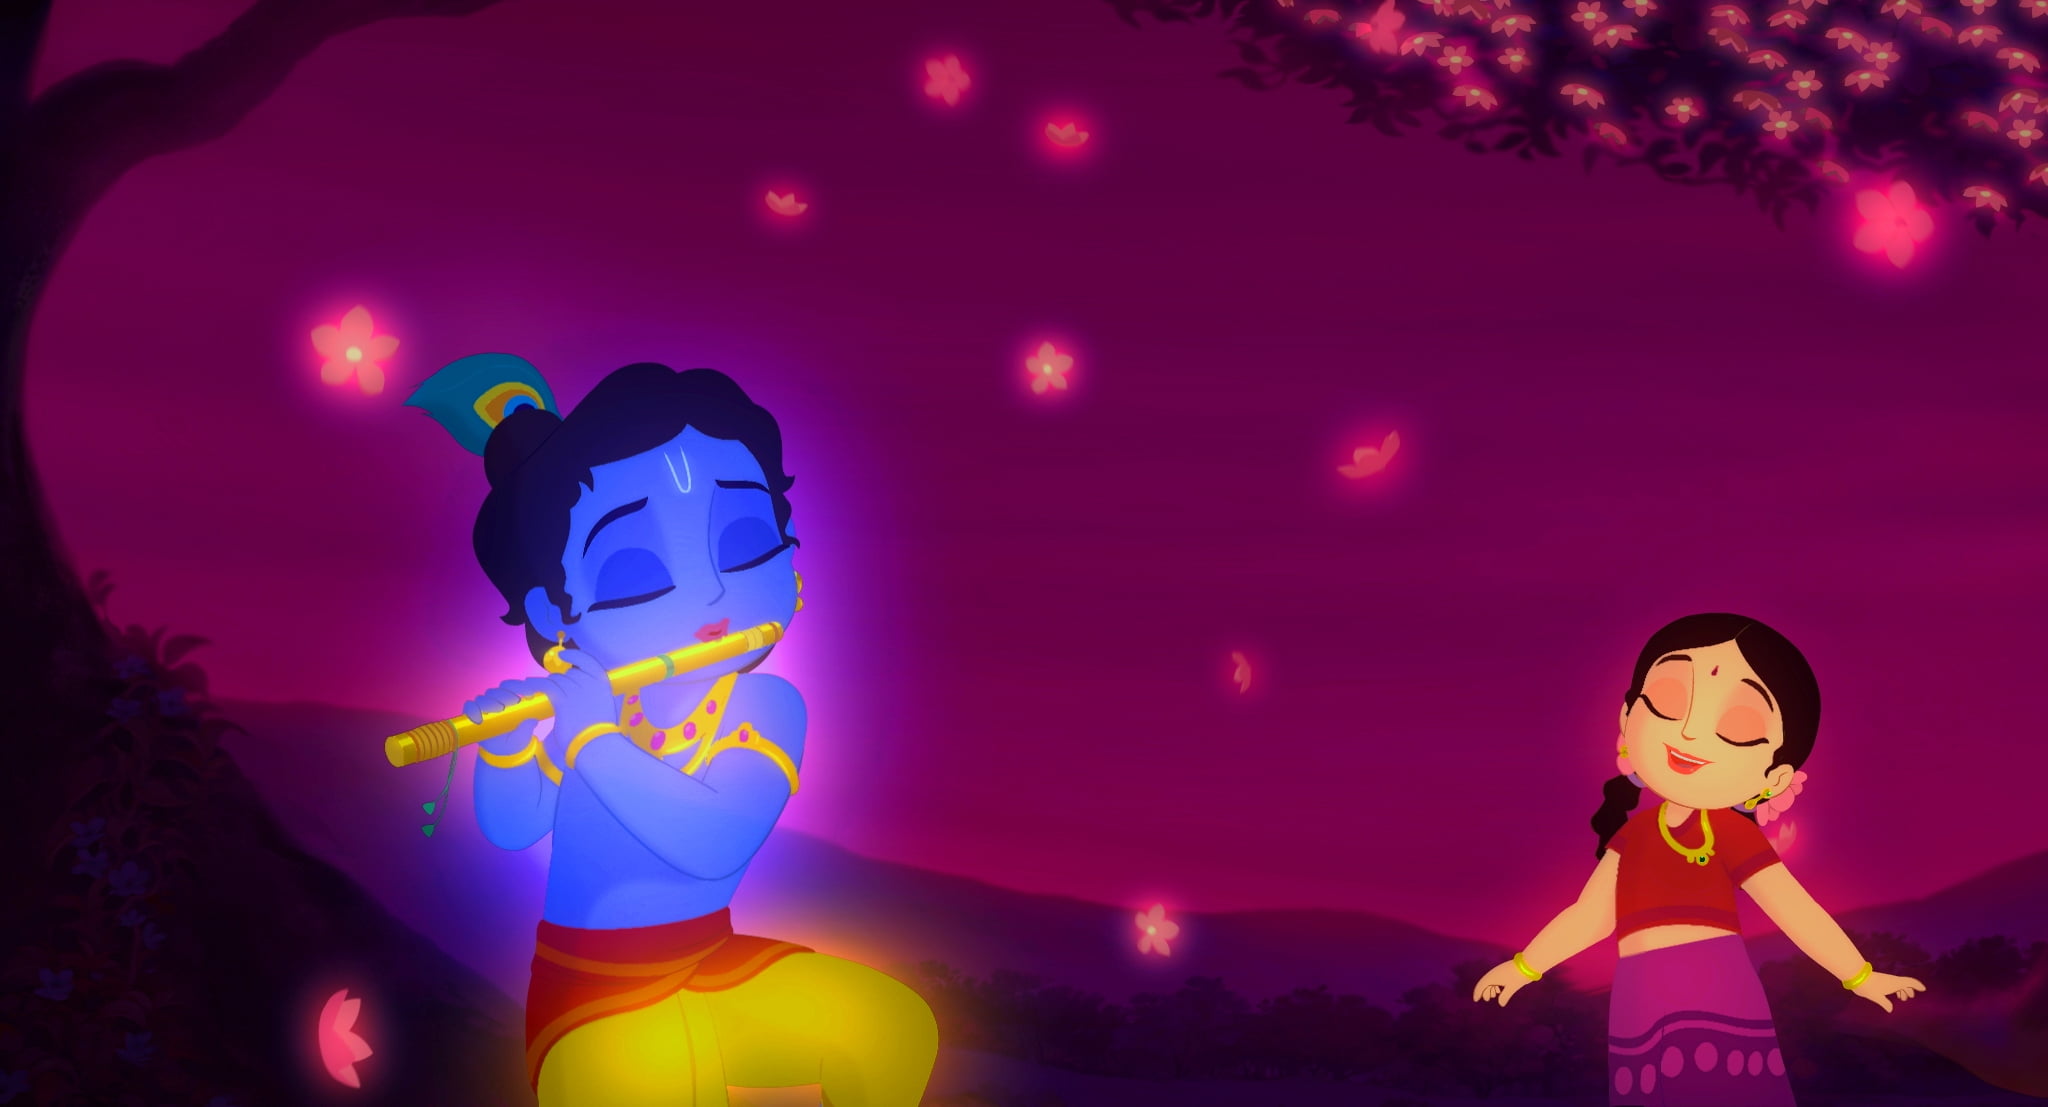 Lord Krishna Playing Flute With Radh, Krishna and Radha illustration